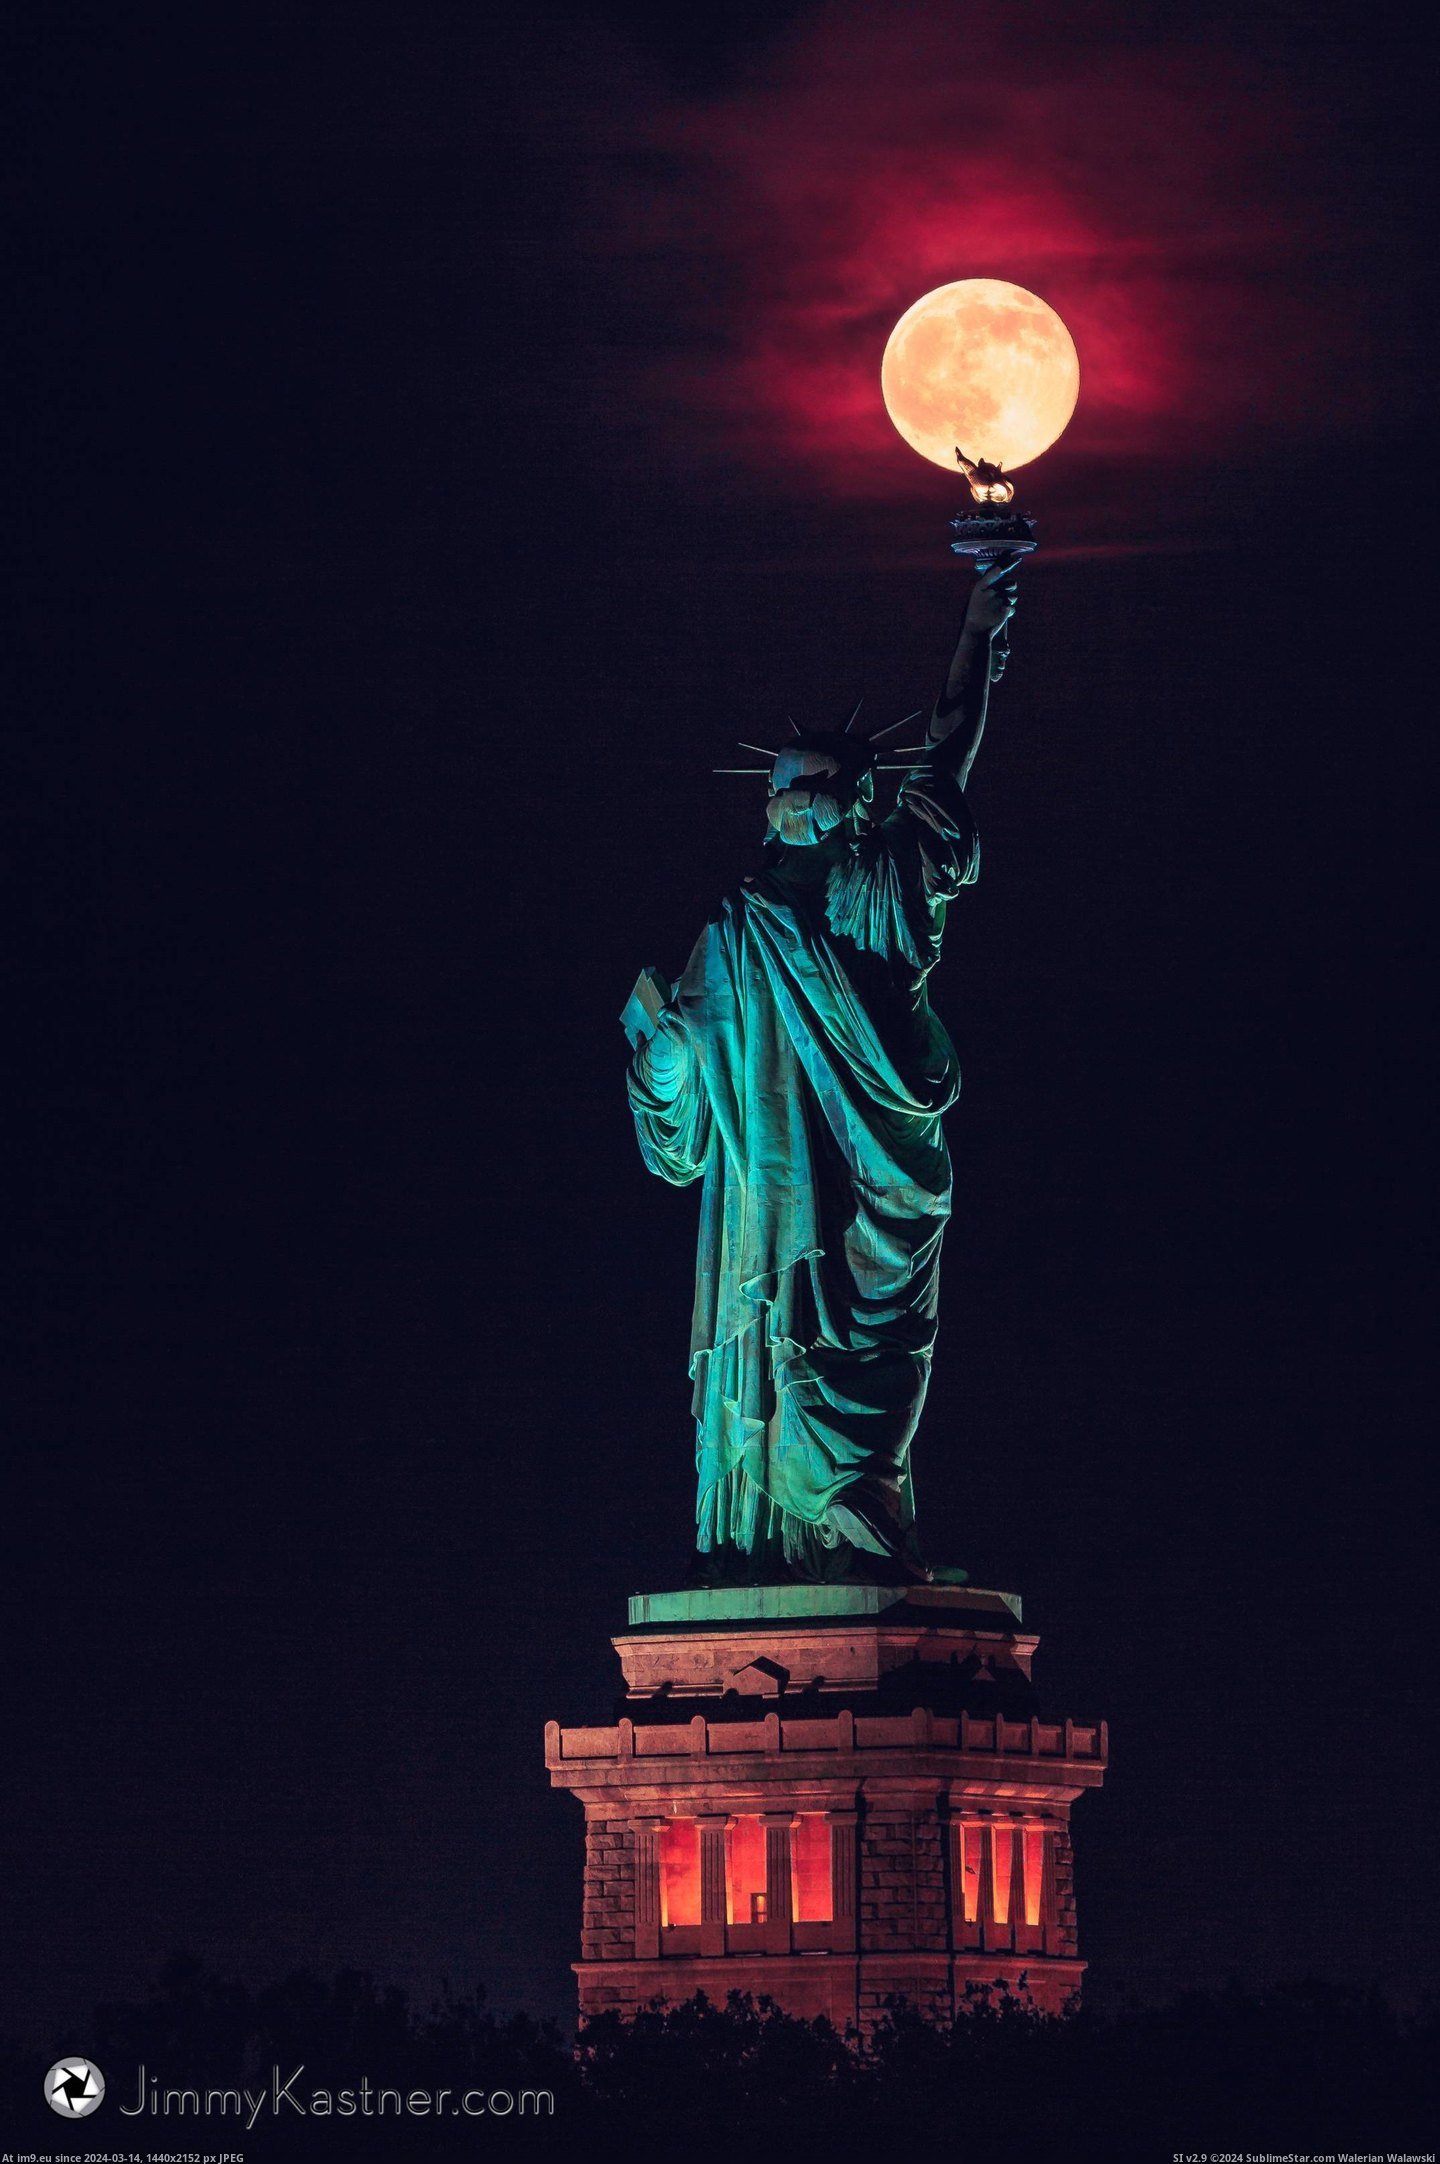 #Night #Full #Summer #Solstice #Balancing #Liberty #Moon #Rare #Statue [Pics] Last night's rare summer solstice full moon balancing on the Statue of Liberty's torch Pic. (Obraz z album My r/PICS favs))